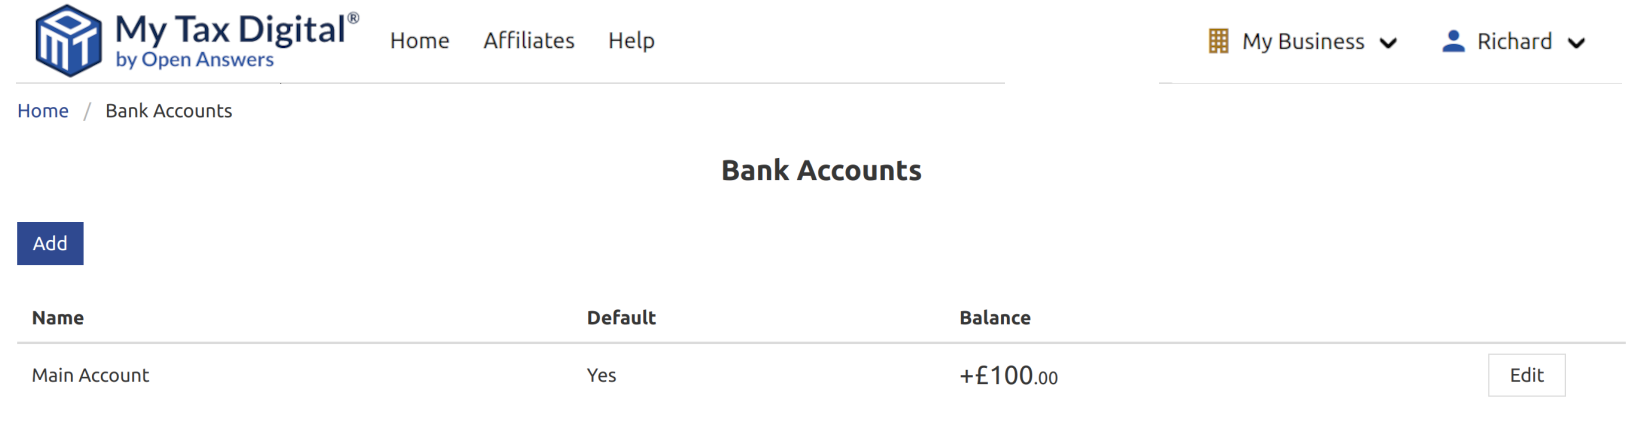 My Tax Digital Bank Balance